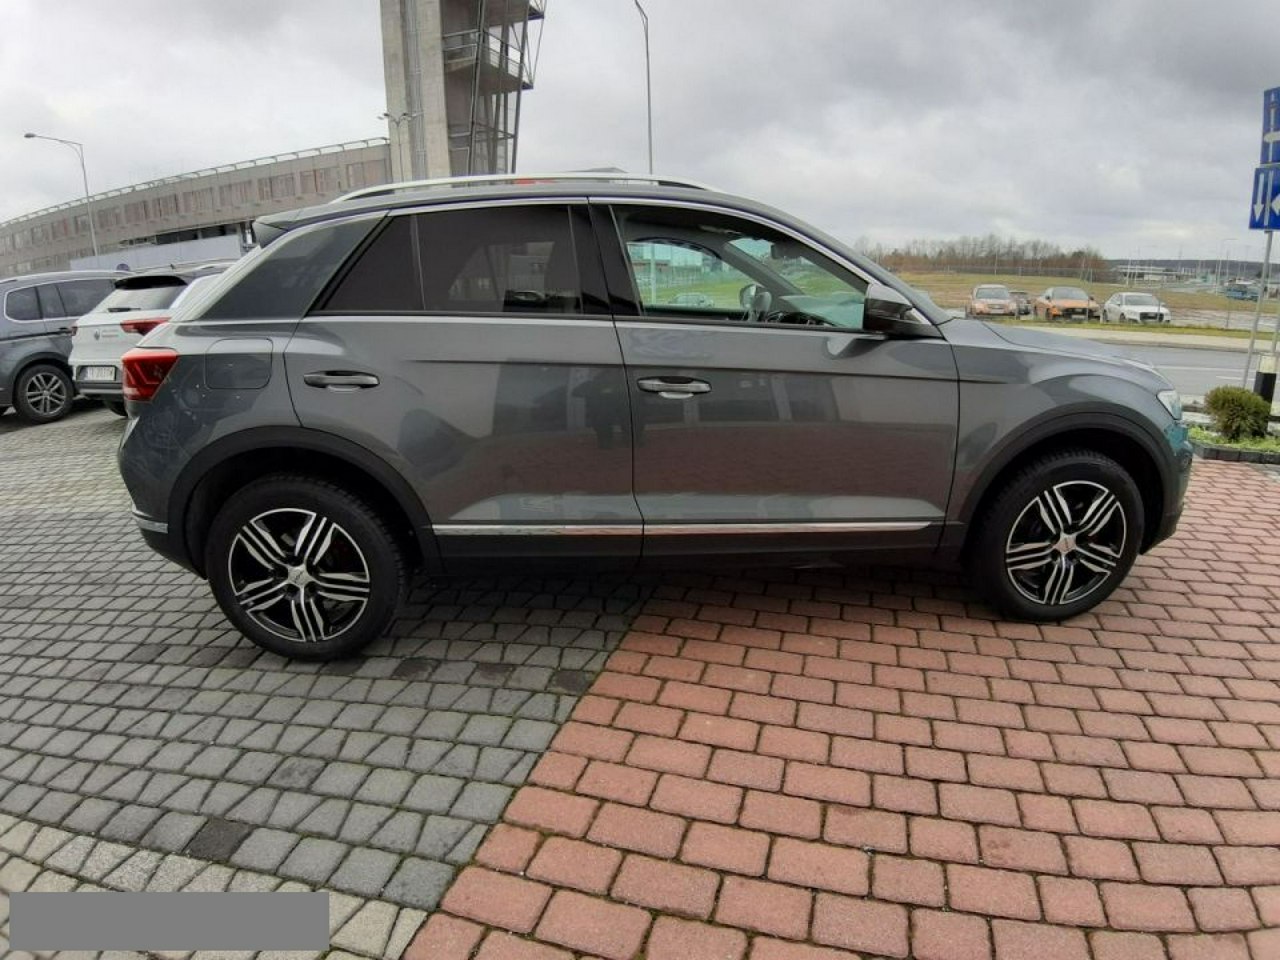 Volkswagen TRoc 115 KM, rok produkcji 2018, oferta AKL16QJV6